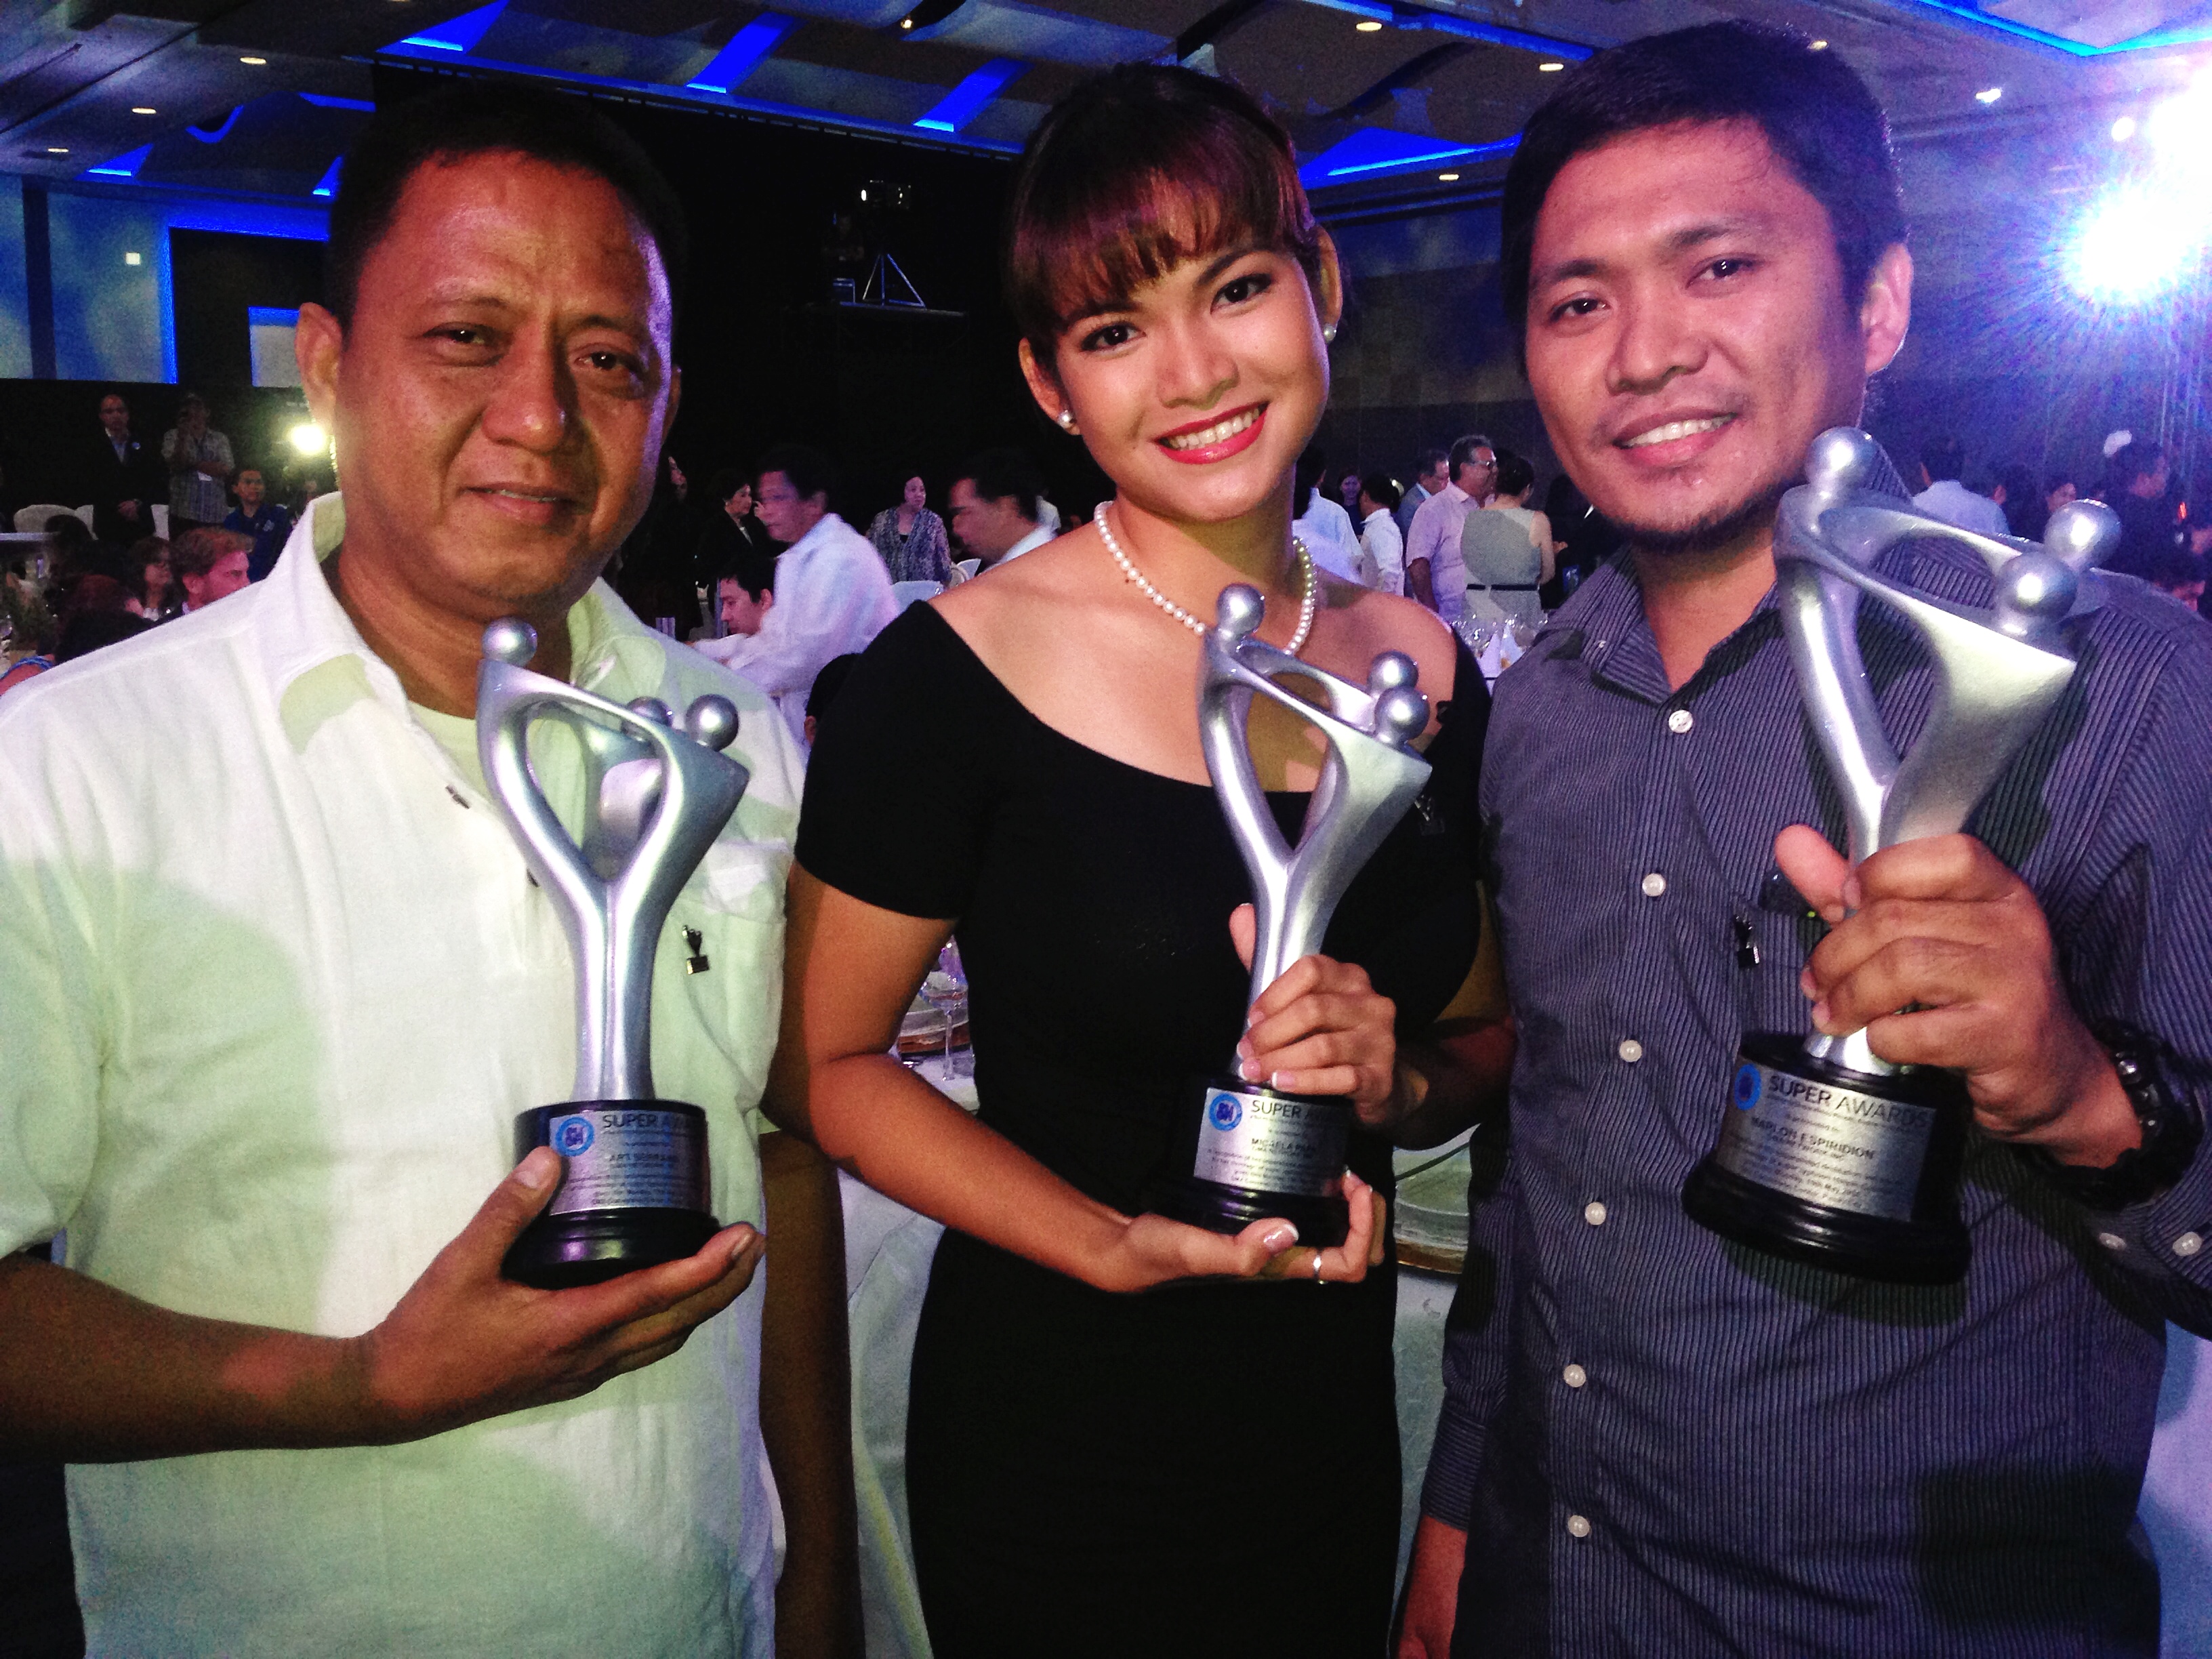 SM Super Award for Yolanda coverage with Cameraman Art Serrano and Asst. Cameraman Marlon Espiridion